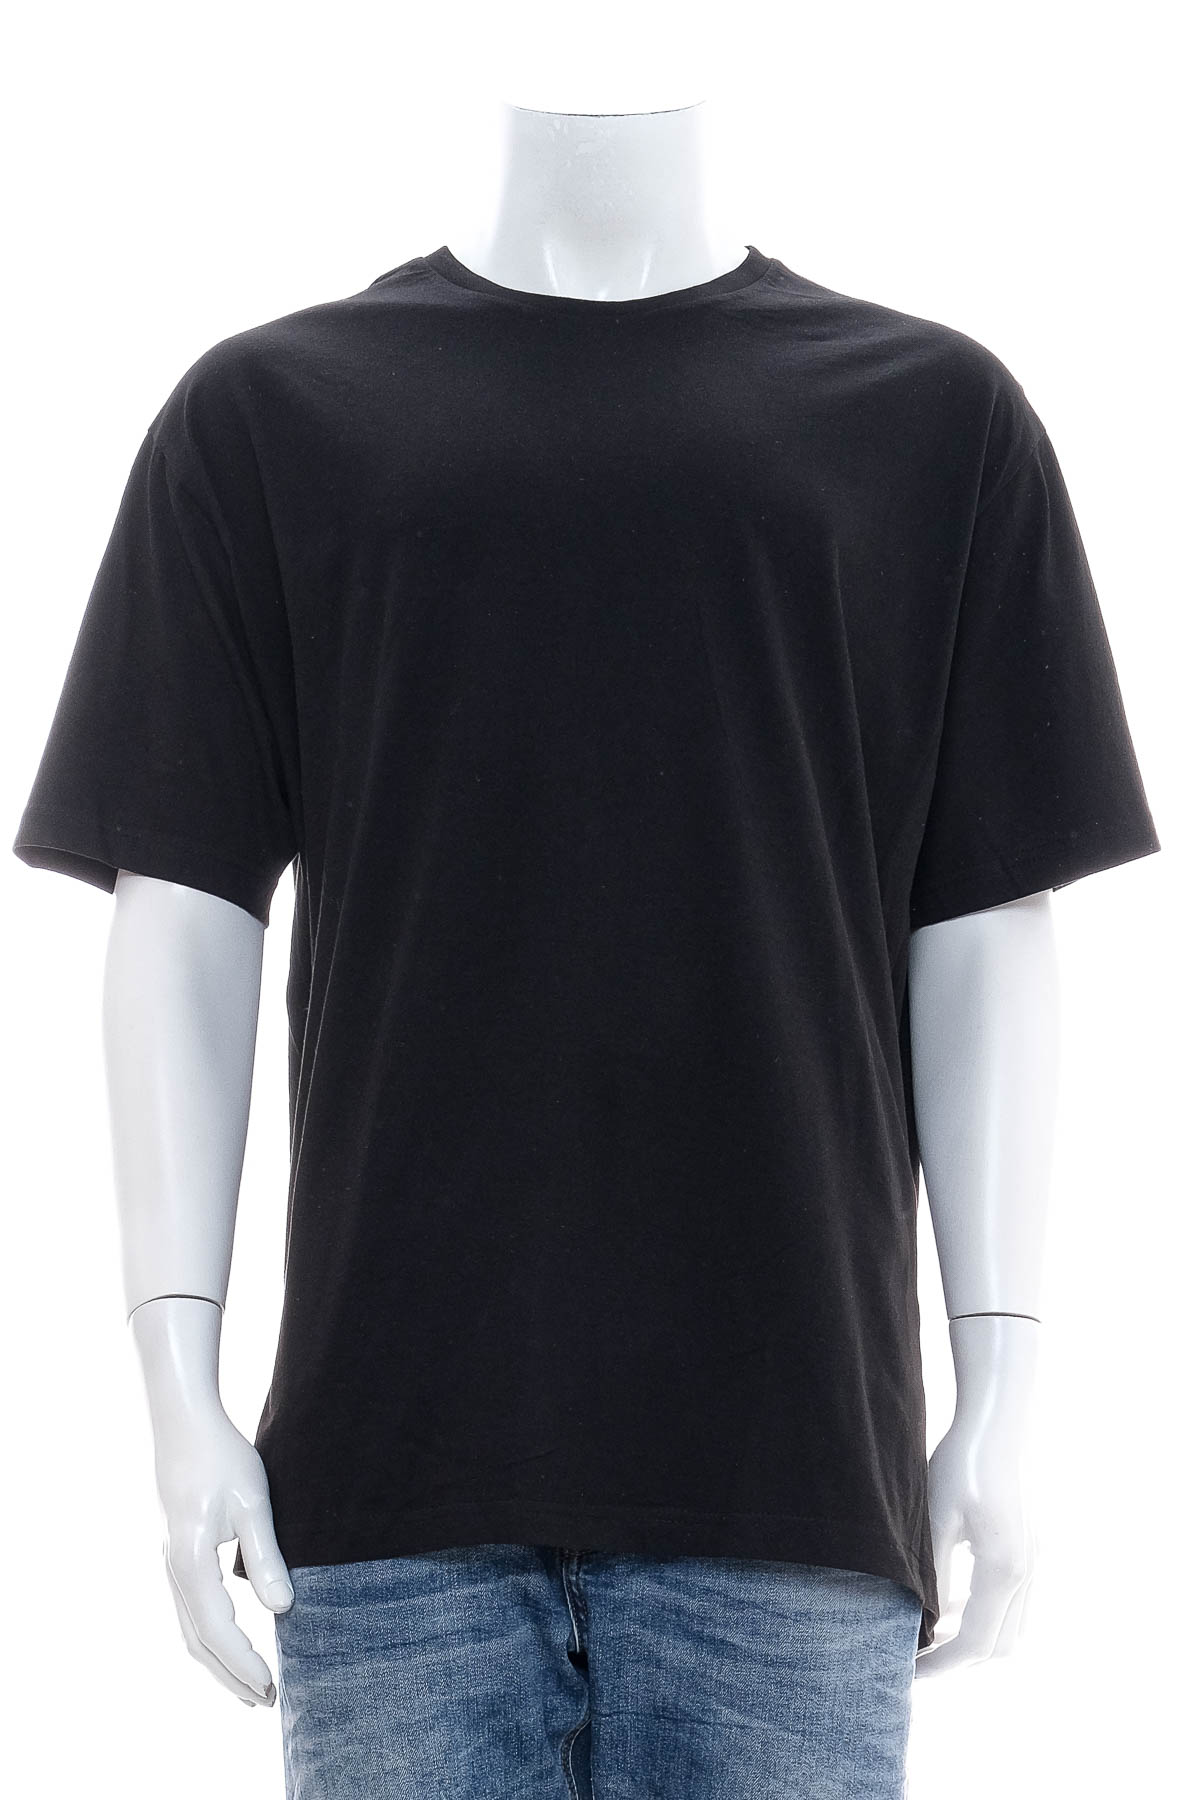 Men's T-shirt - Otto Kern - 0